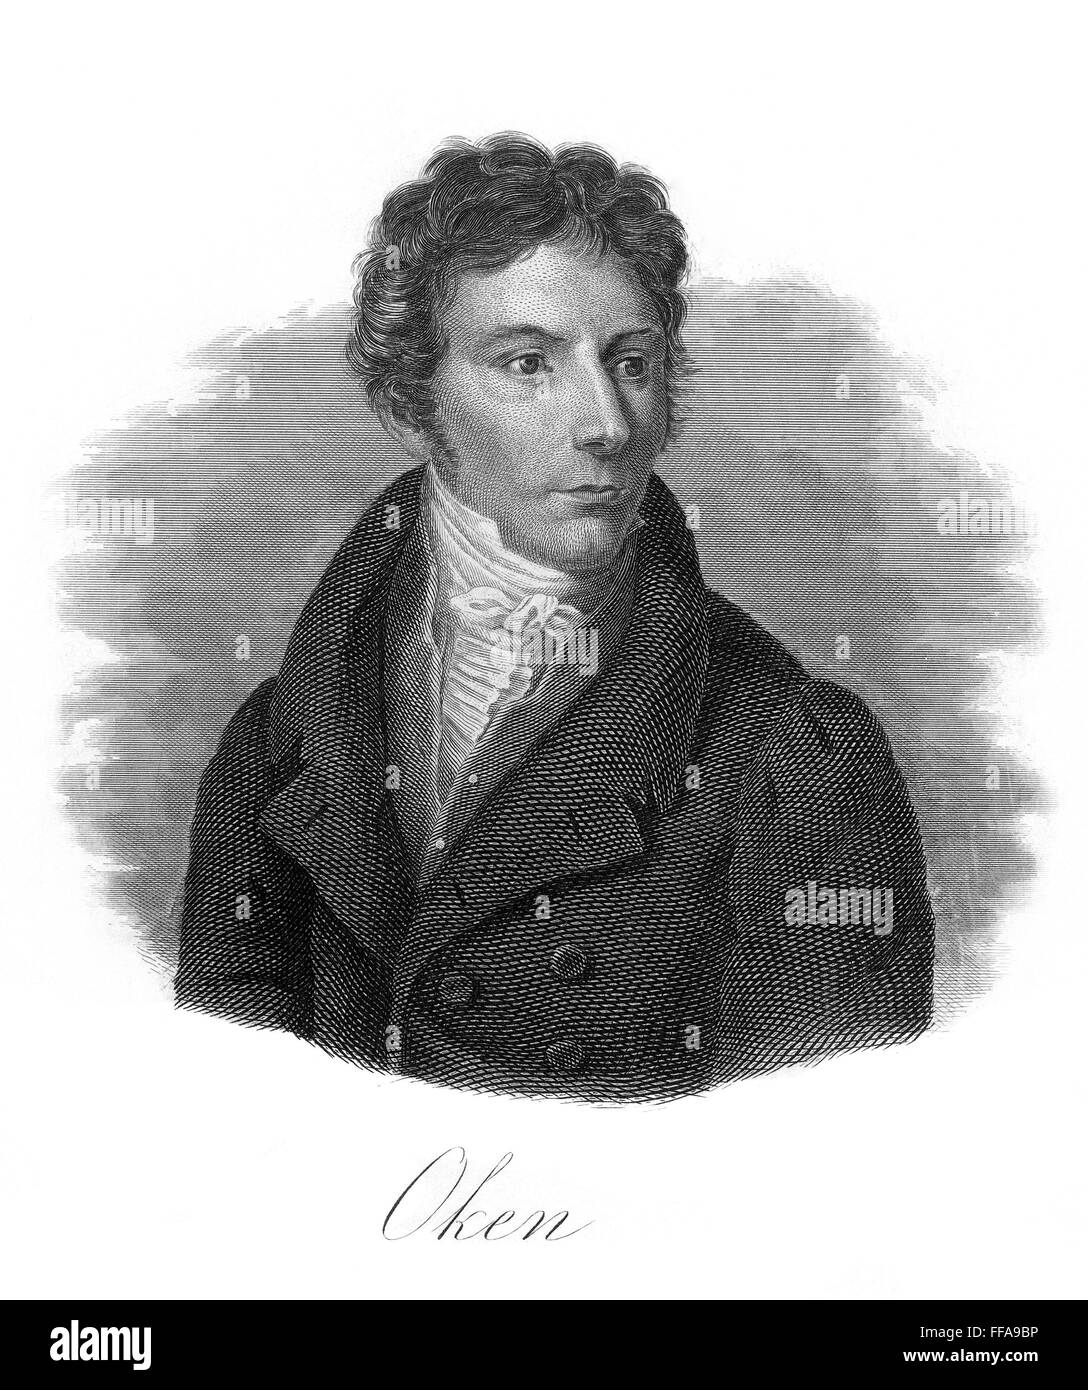 LORENZ OKEN (1779-1851)./nGerman naturaliste et philosophe. Banque D'Images